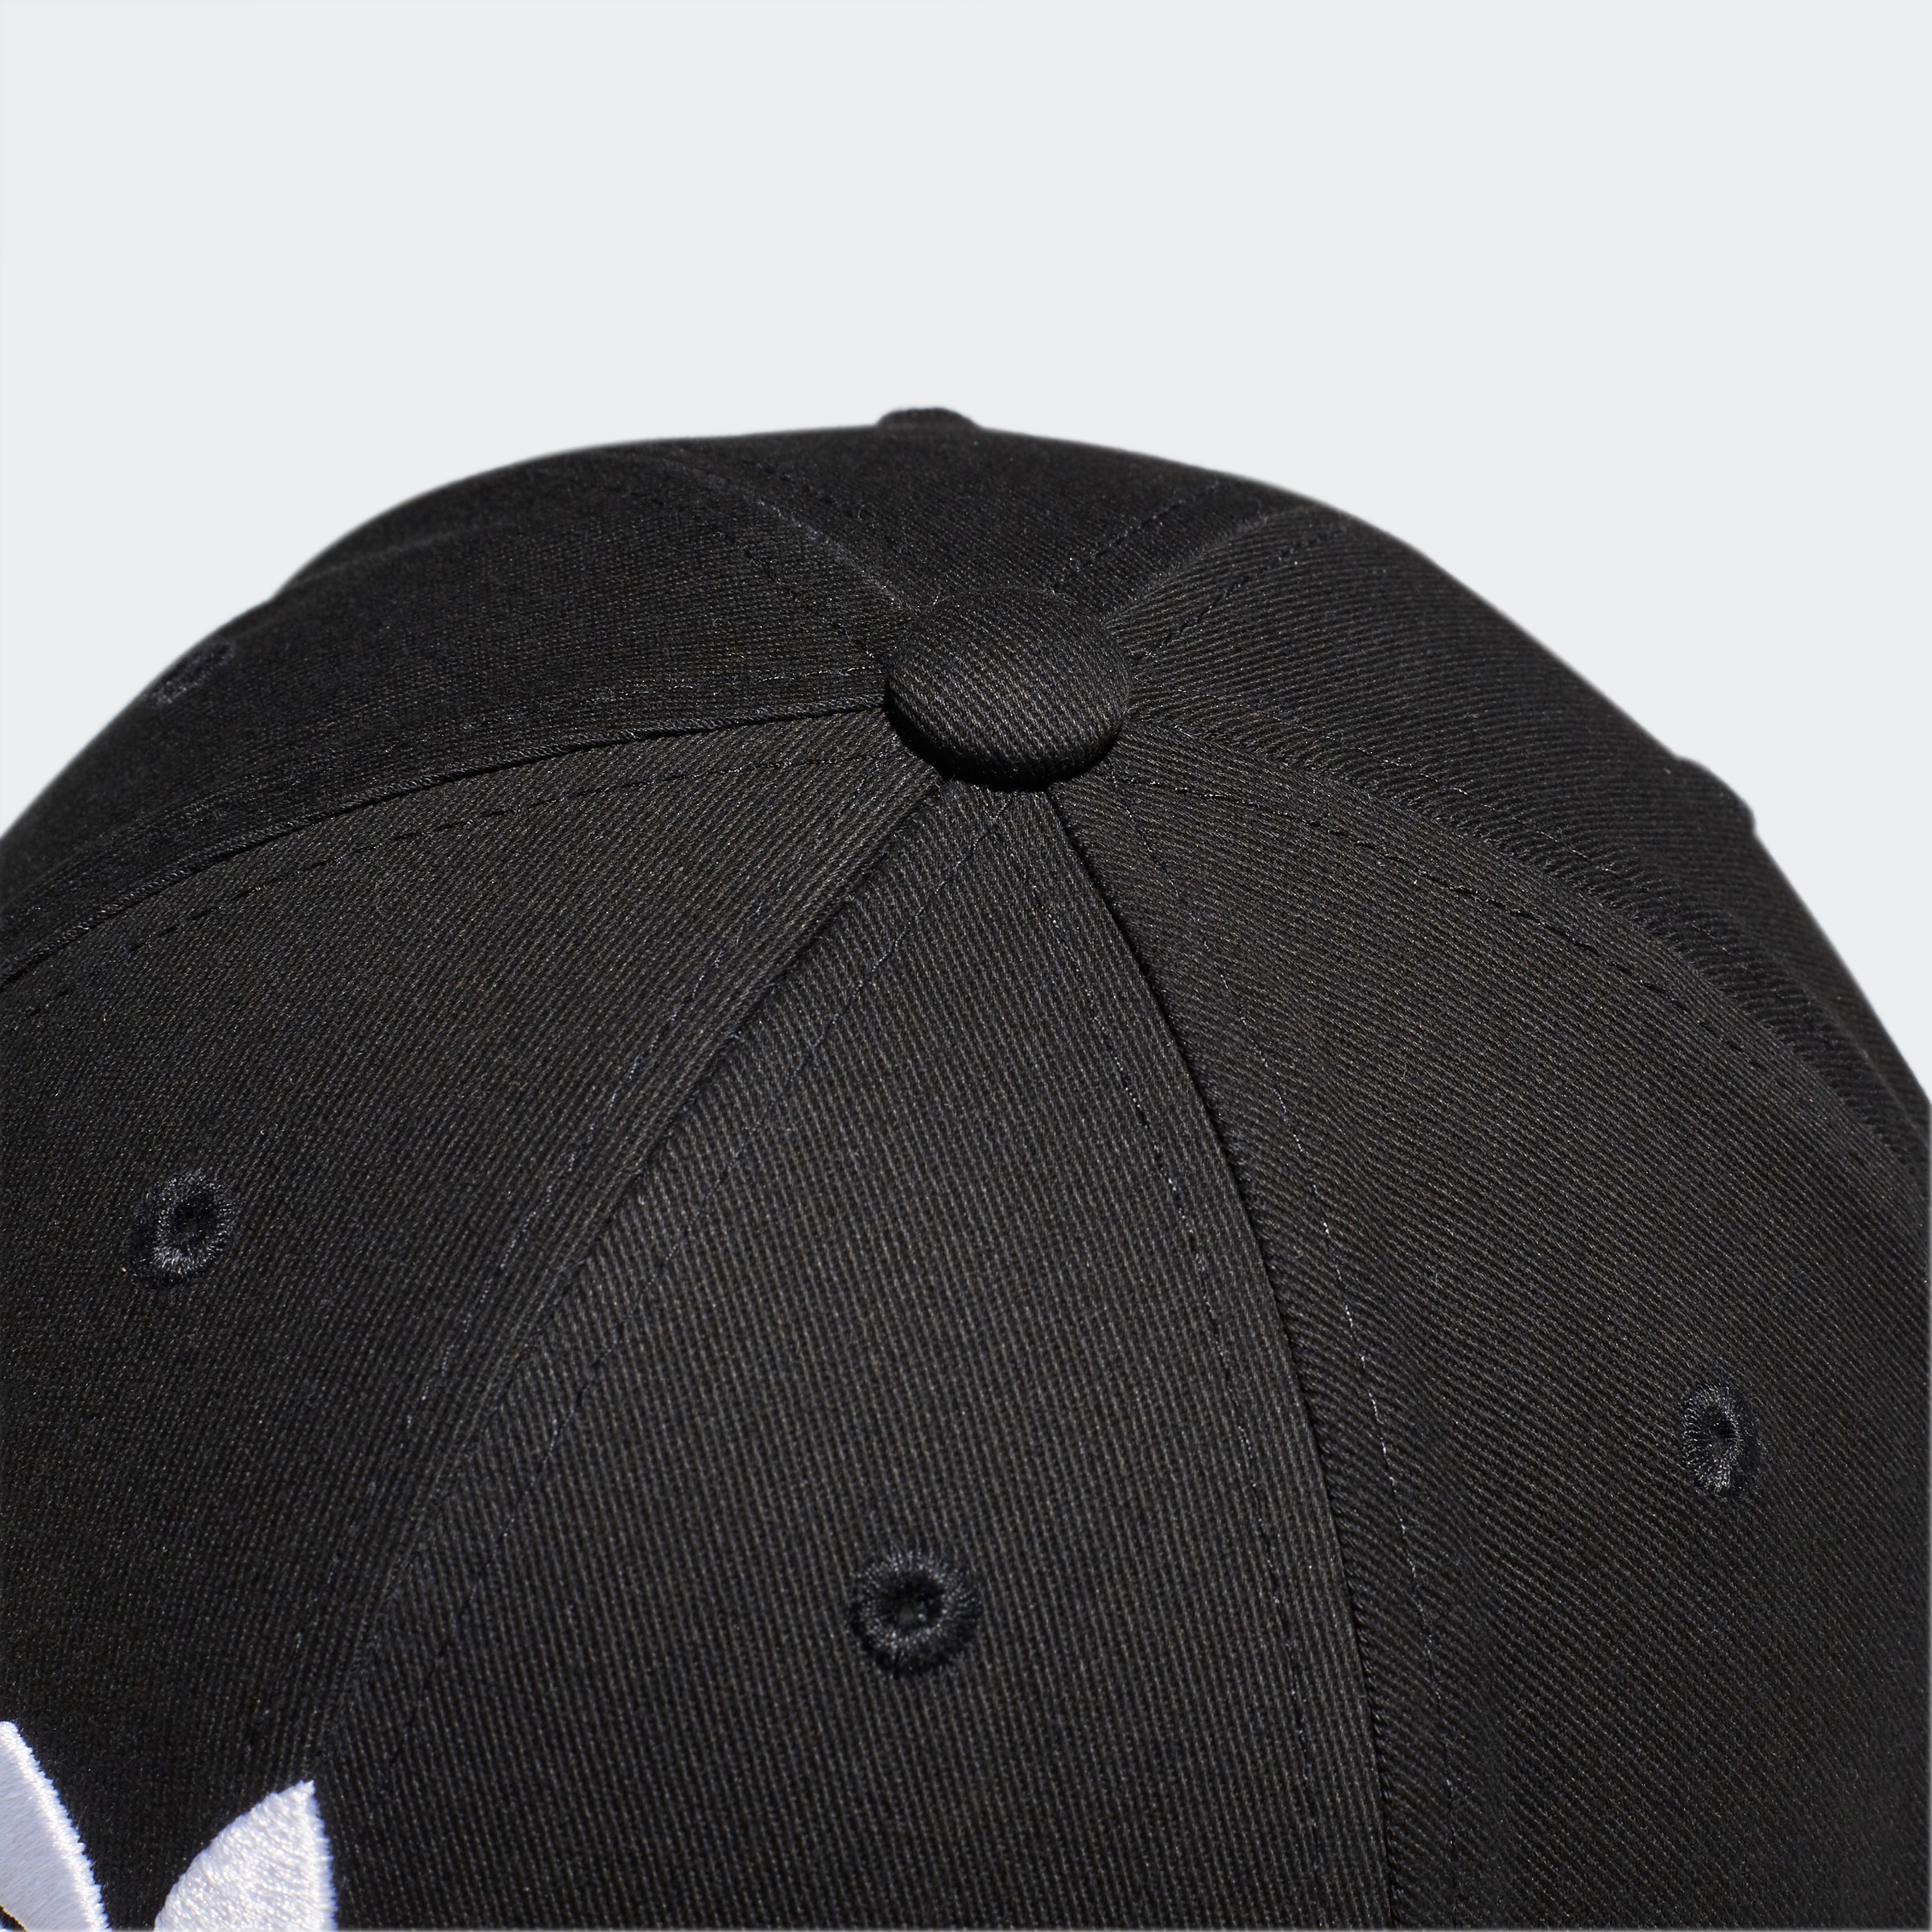 adidas Baseball BASEBALL Cap Originals KAPPE« bei »TREFOIL